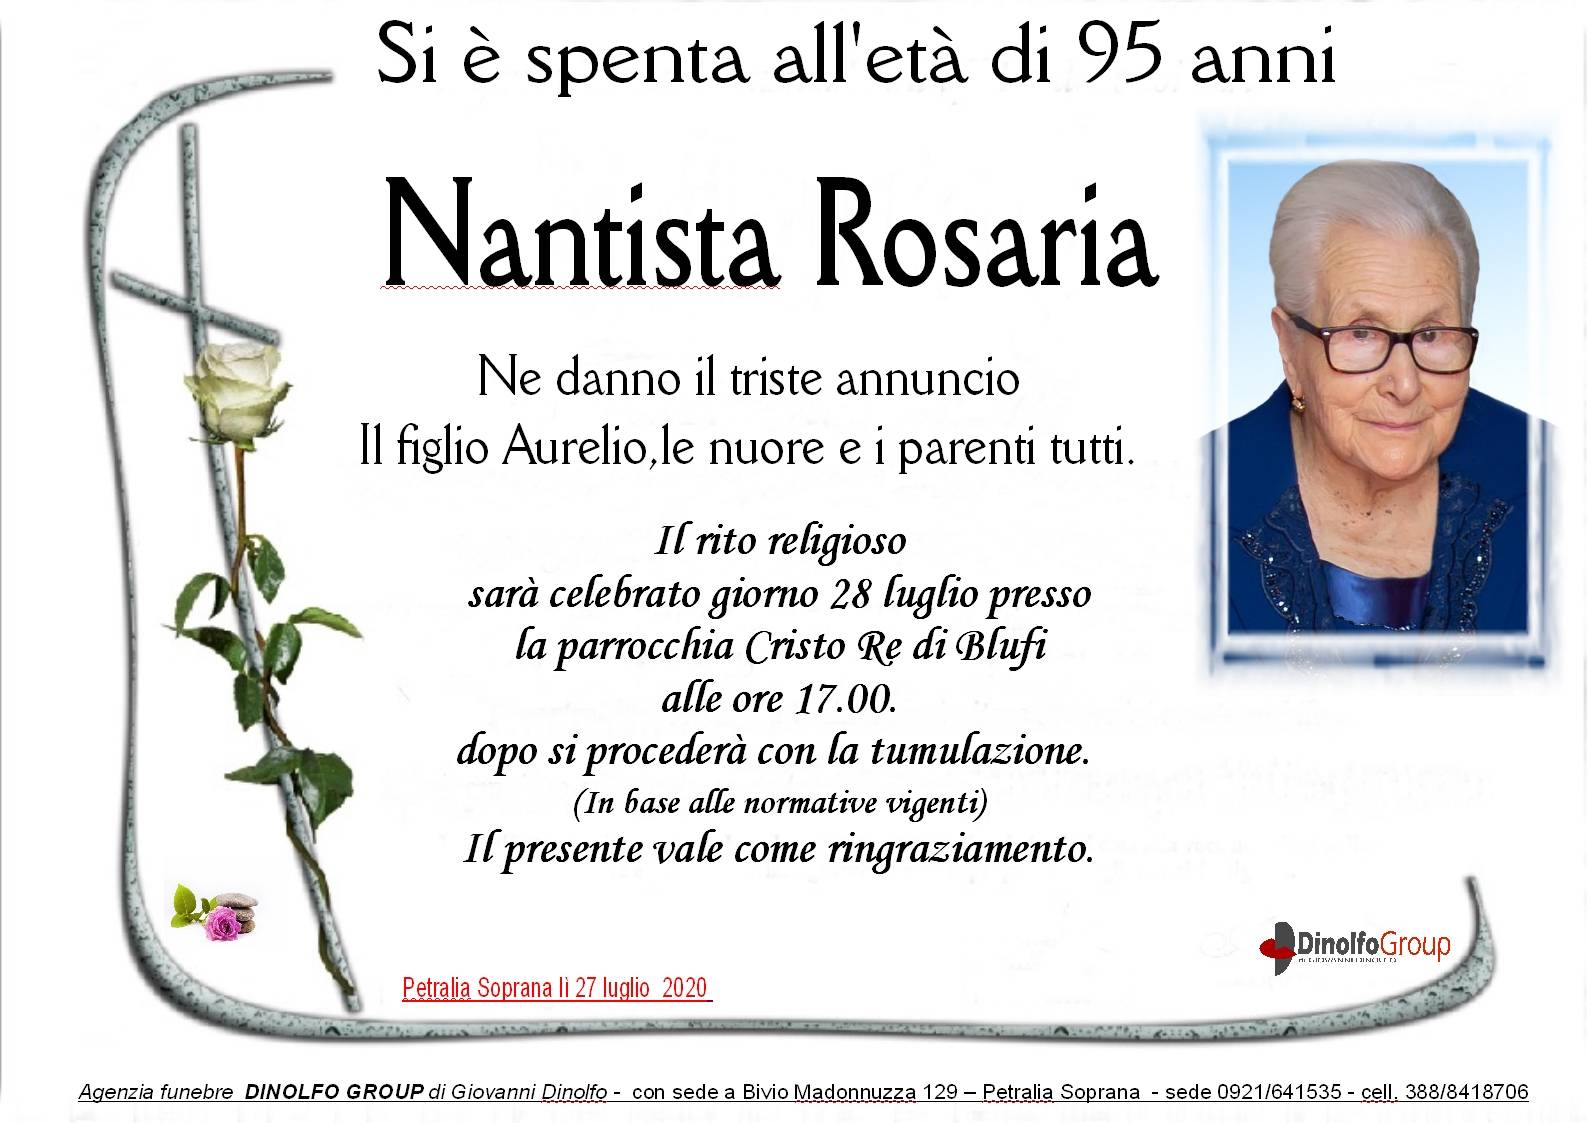 Rosaria Nantista